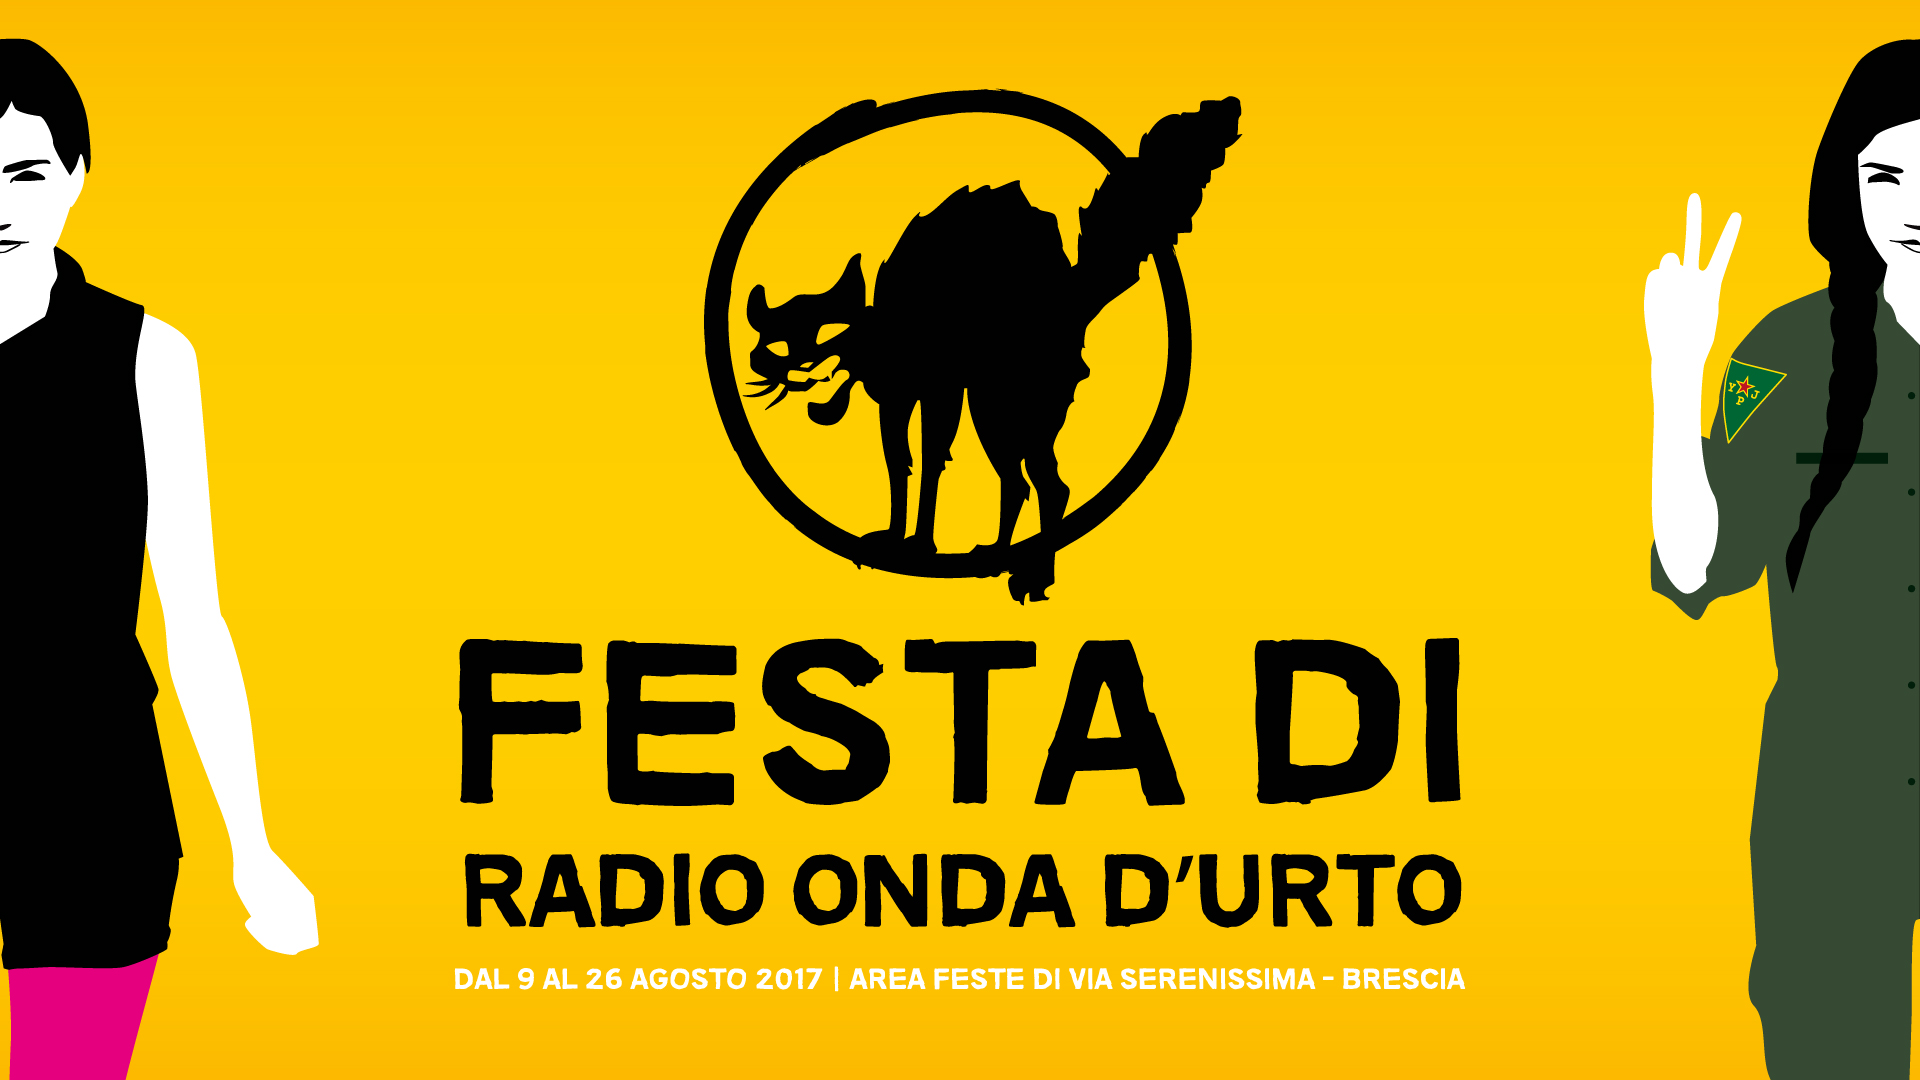 Live @ Festa Radio Onda d’Urto 2017 – 17 agosto